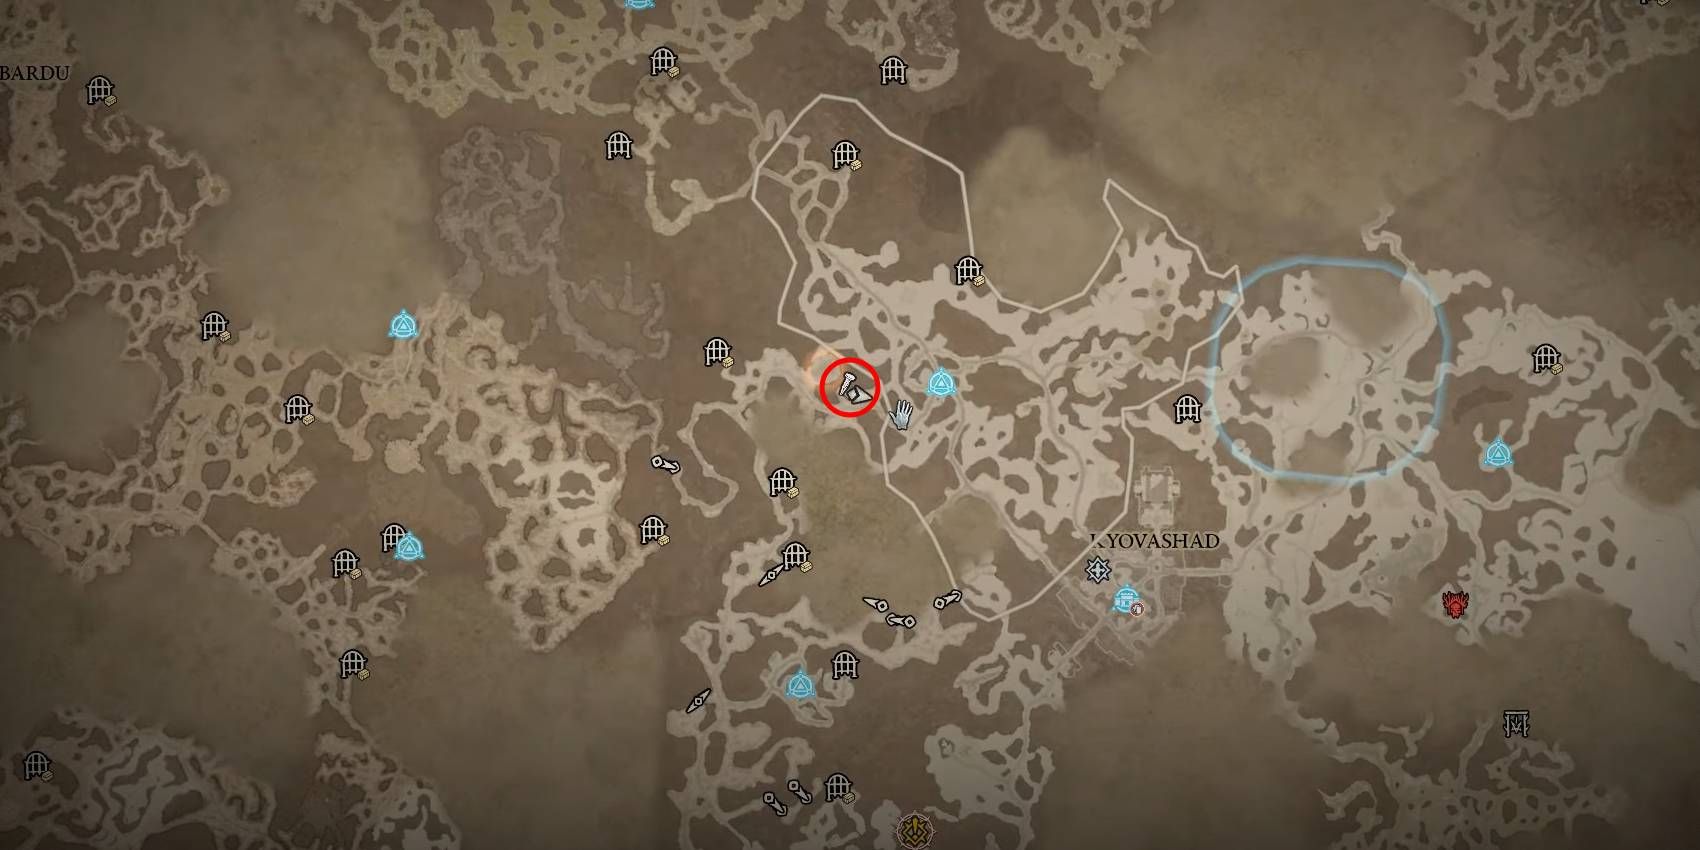 Diablo 4 Rotsplinter Rare Elite Enemy Location marked in Red Circle on Map